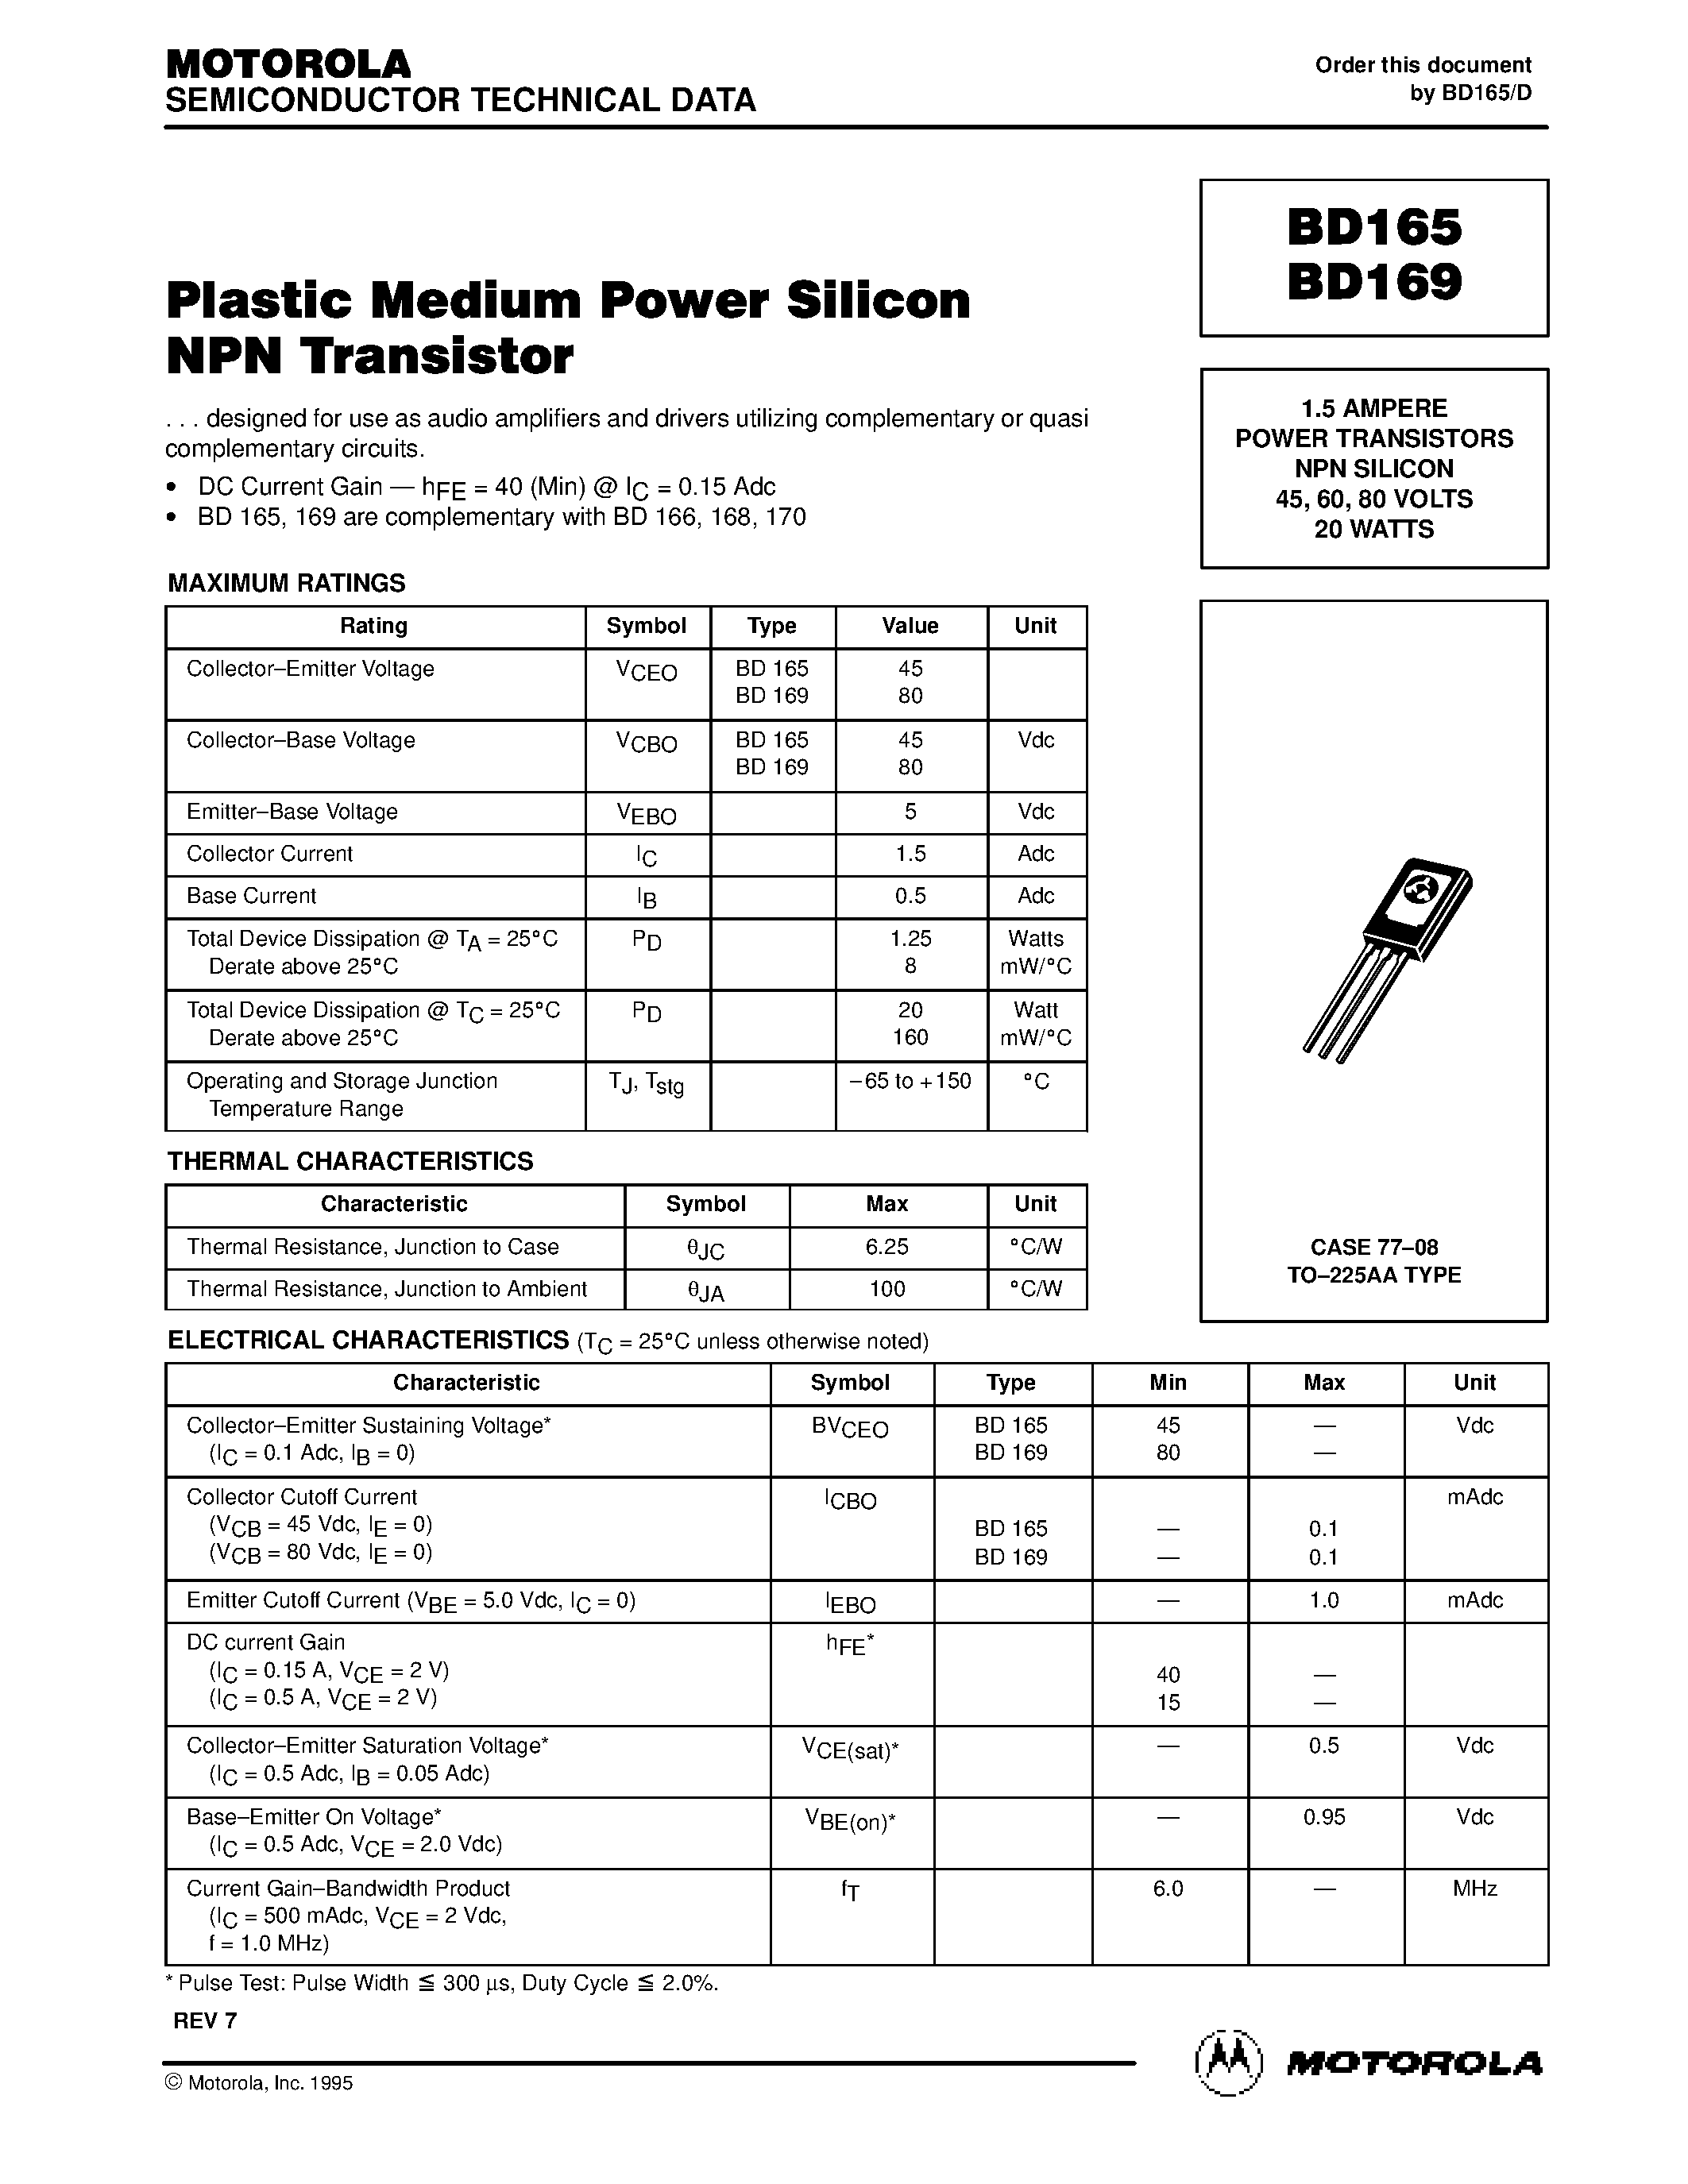 Даташит BD165 - Plastic Medium Power Silicon NPN Transistor страница 1